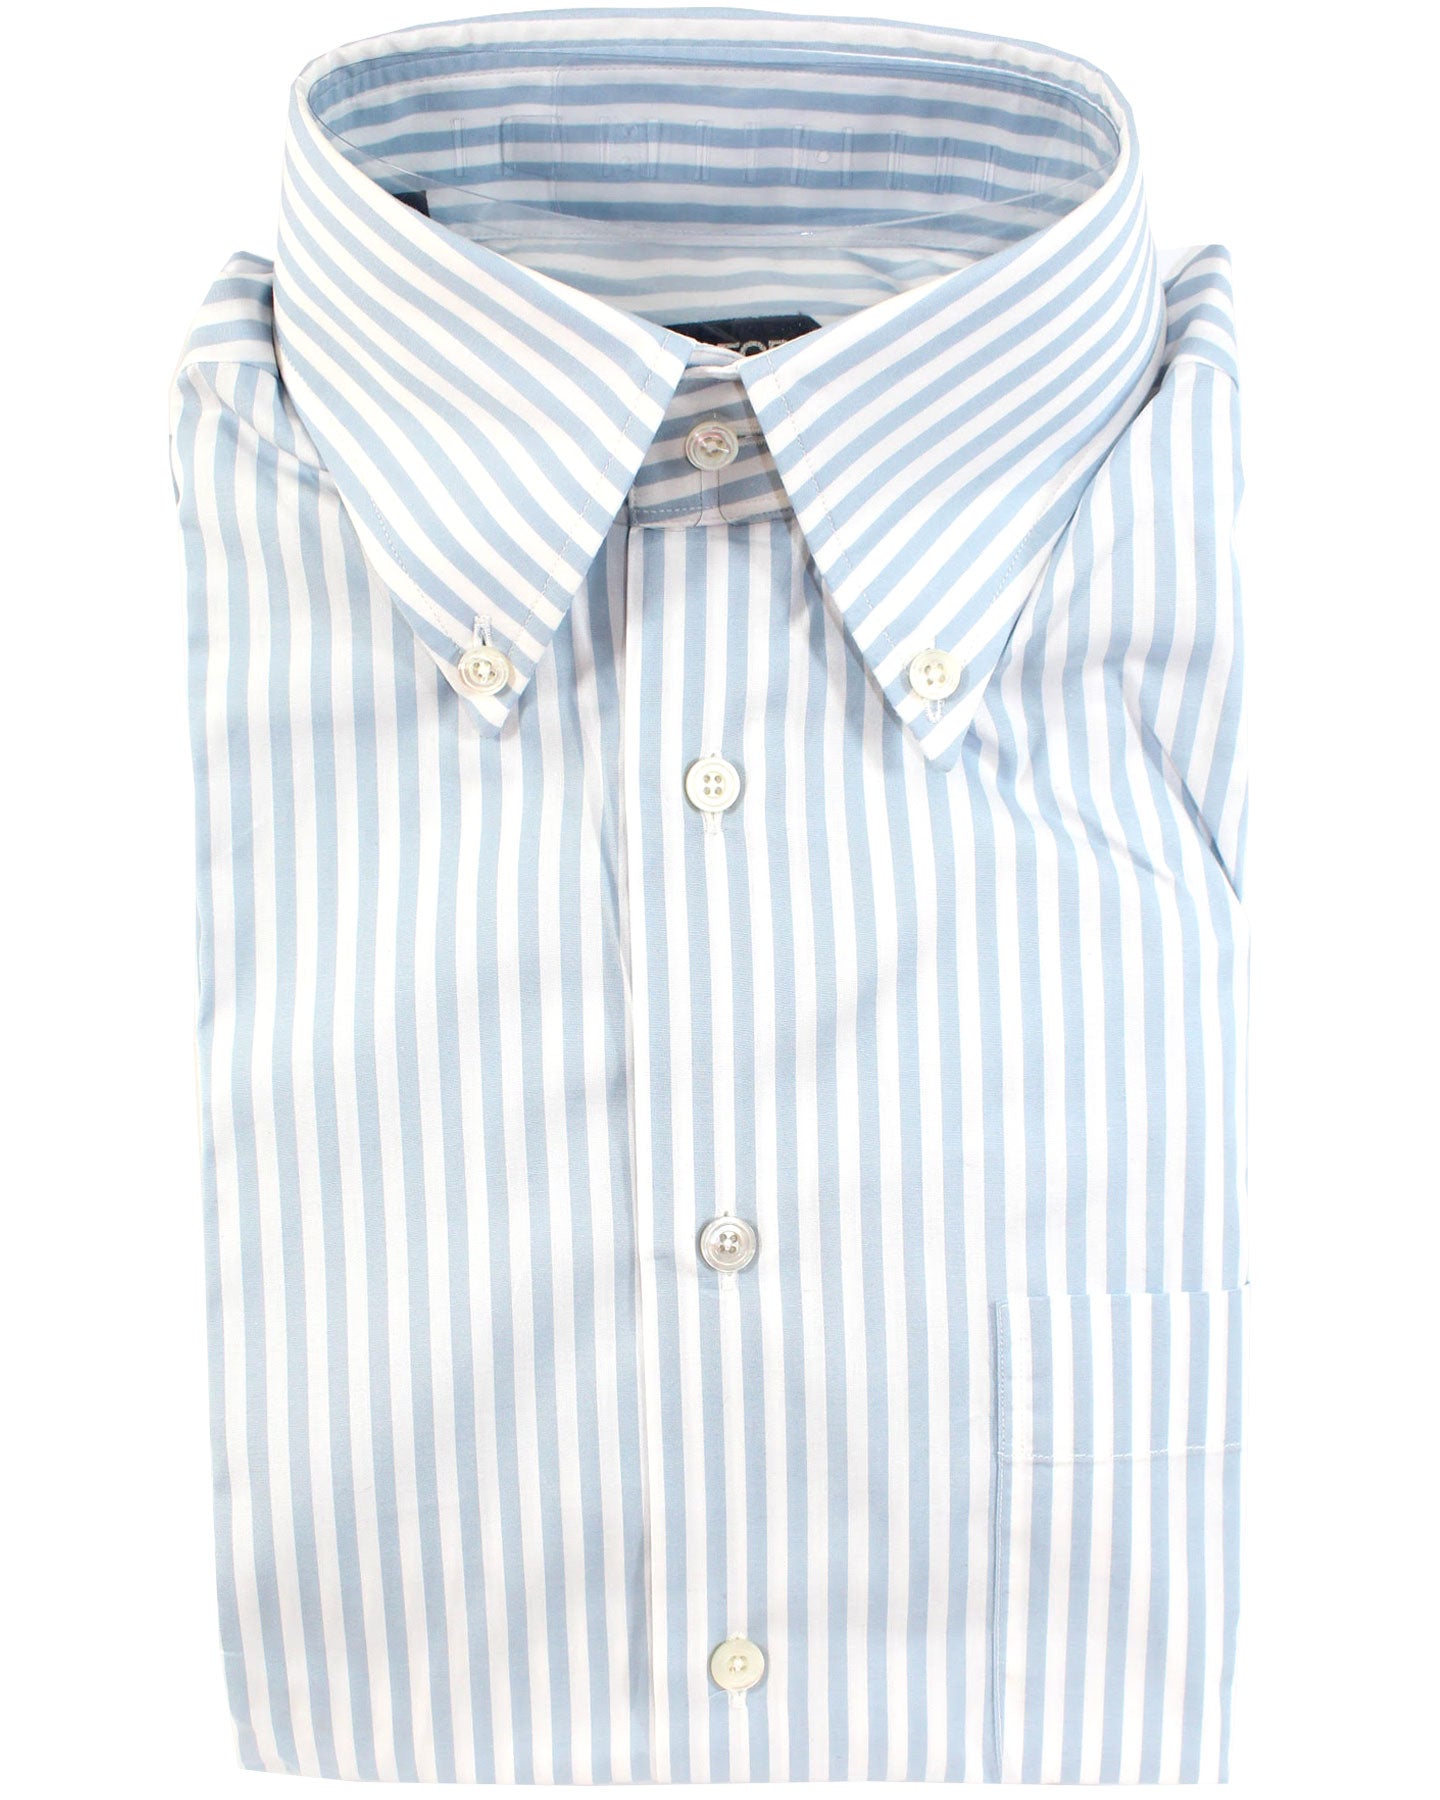 Tom Ford Dress Shirt Powder Blue White Stripes Modern Fit 39 - 15 1/2